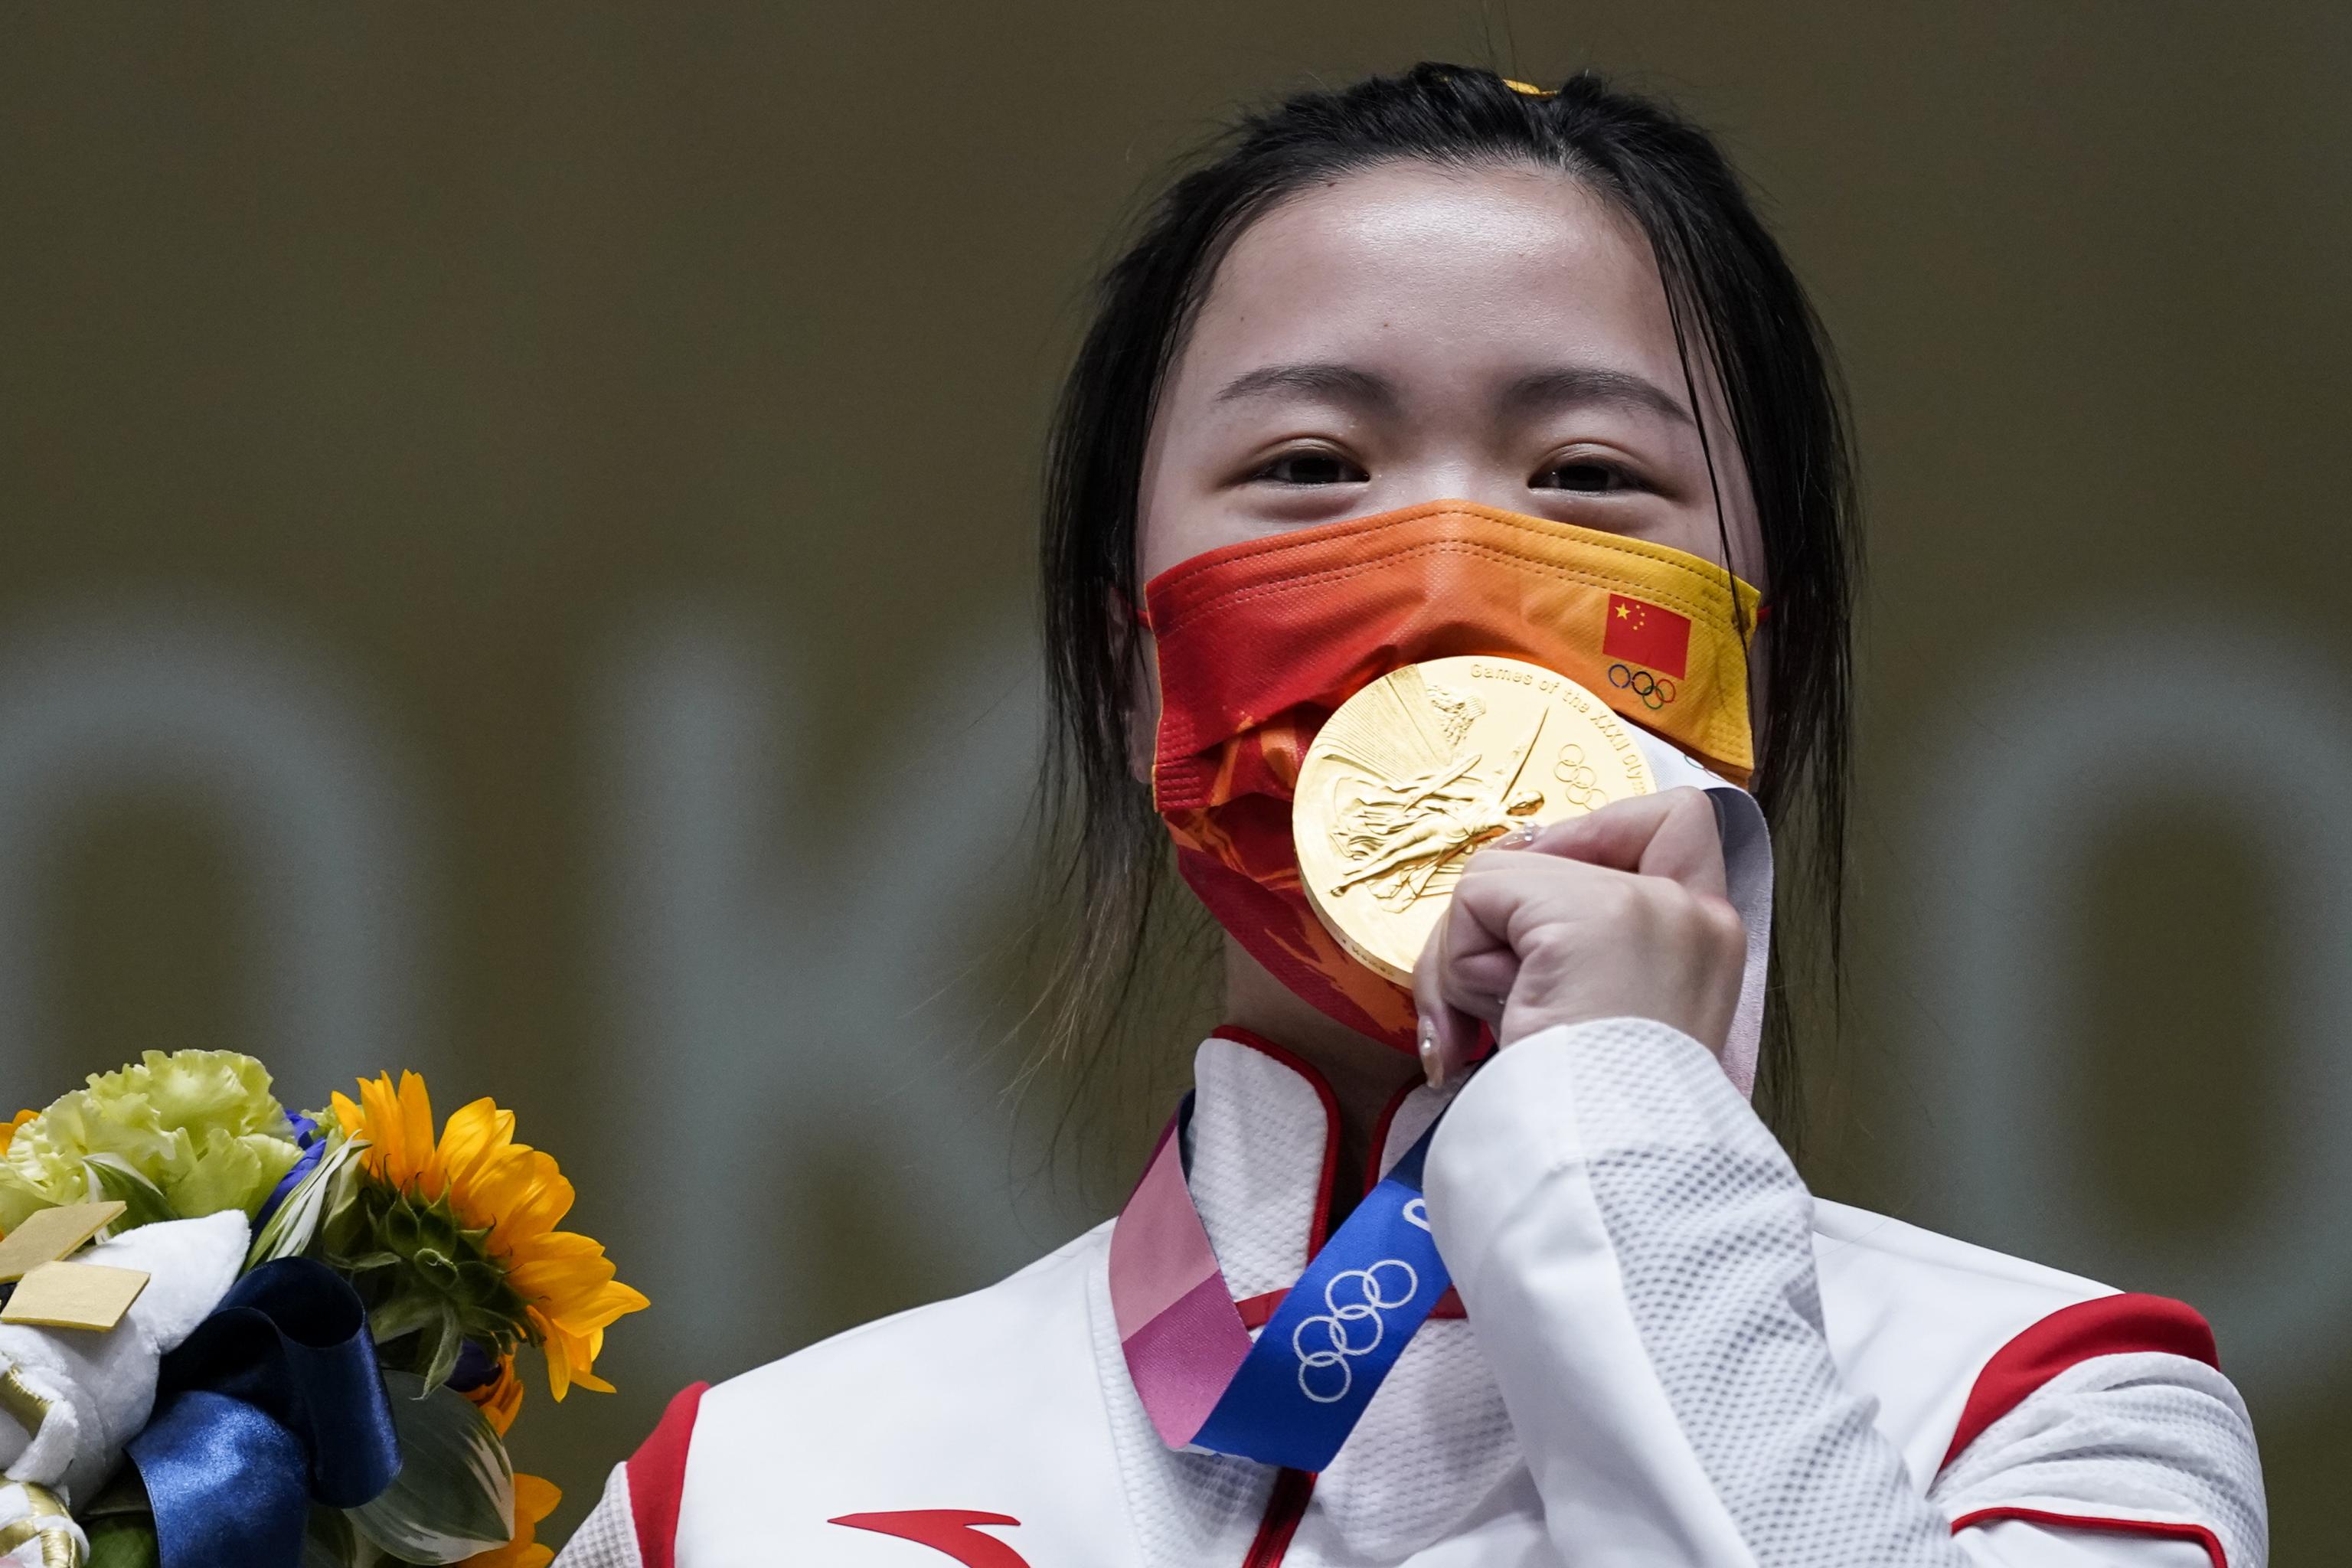 Olympic medal tally 2021